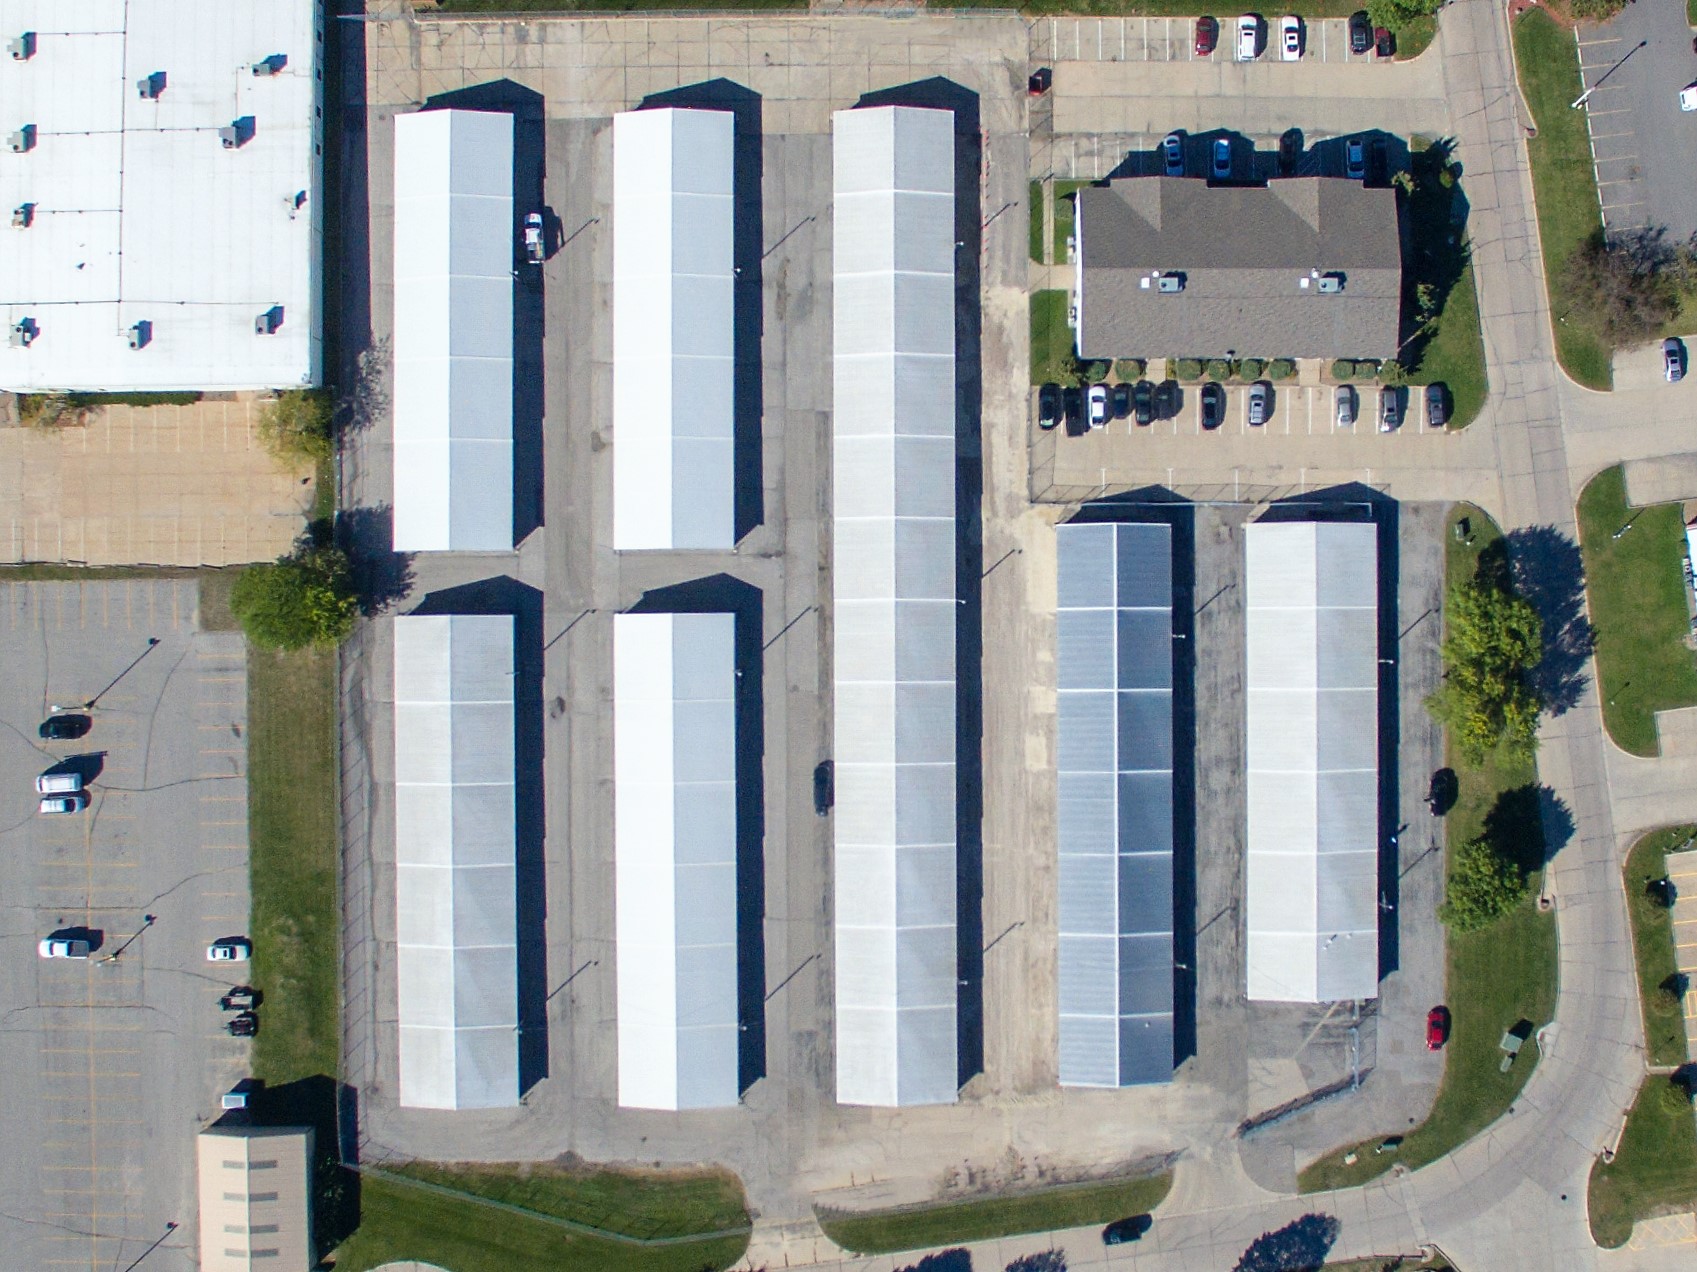 Southgate Self Storage Aerial View